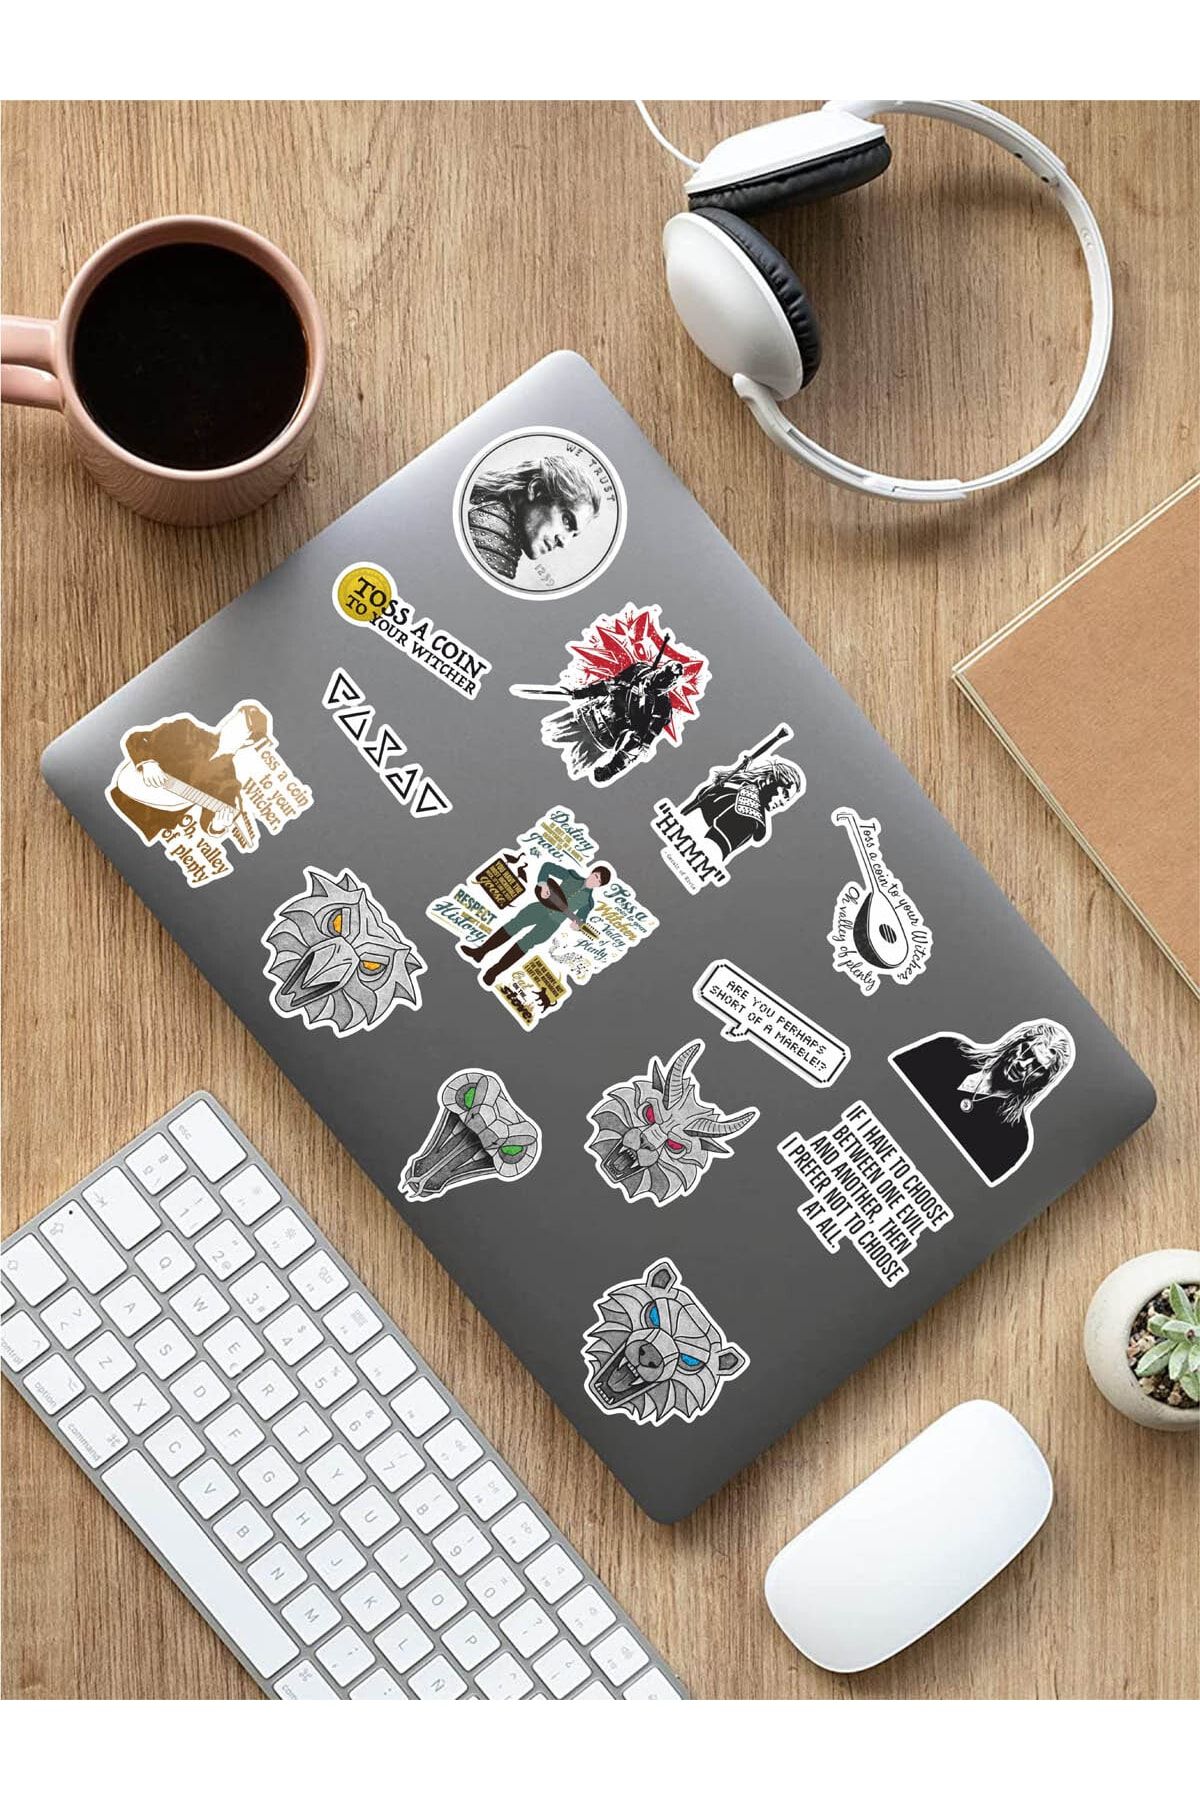 AR Sticker - The Witcher Laptop Notebook Tablet Sticker Set 2